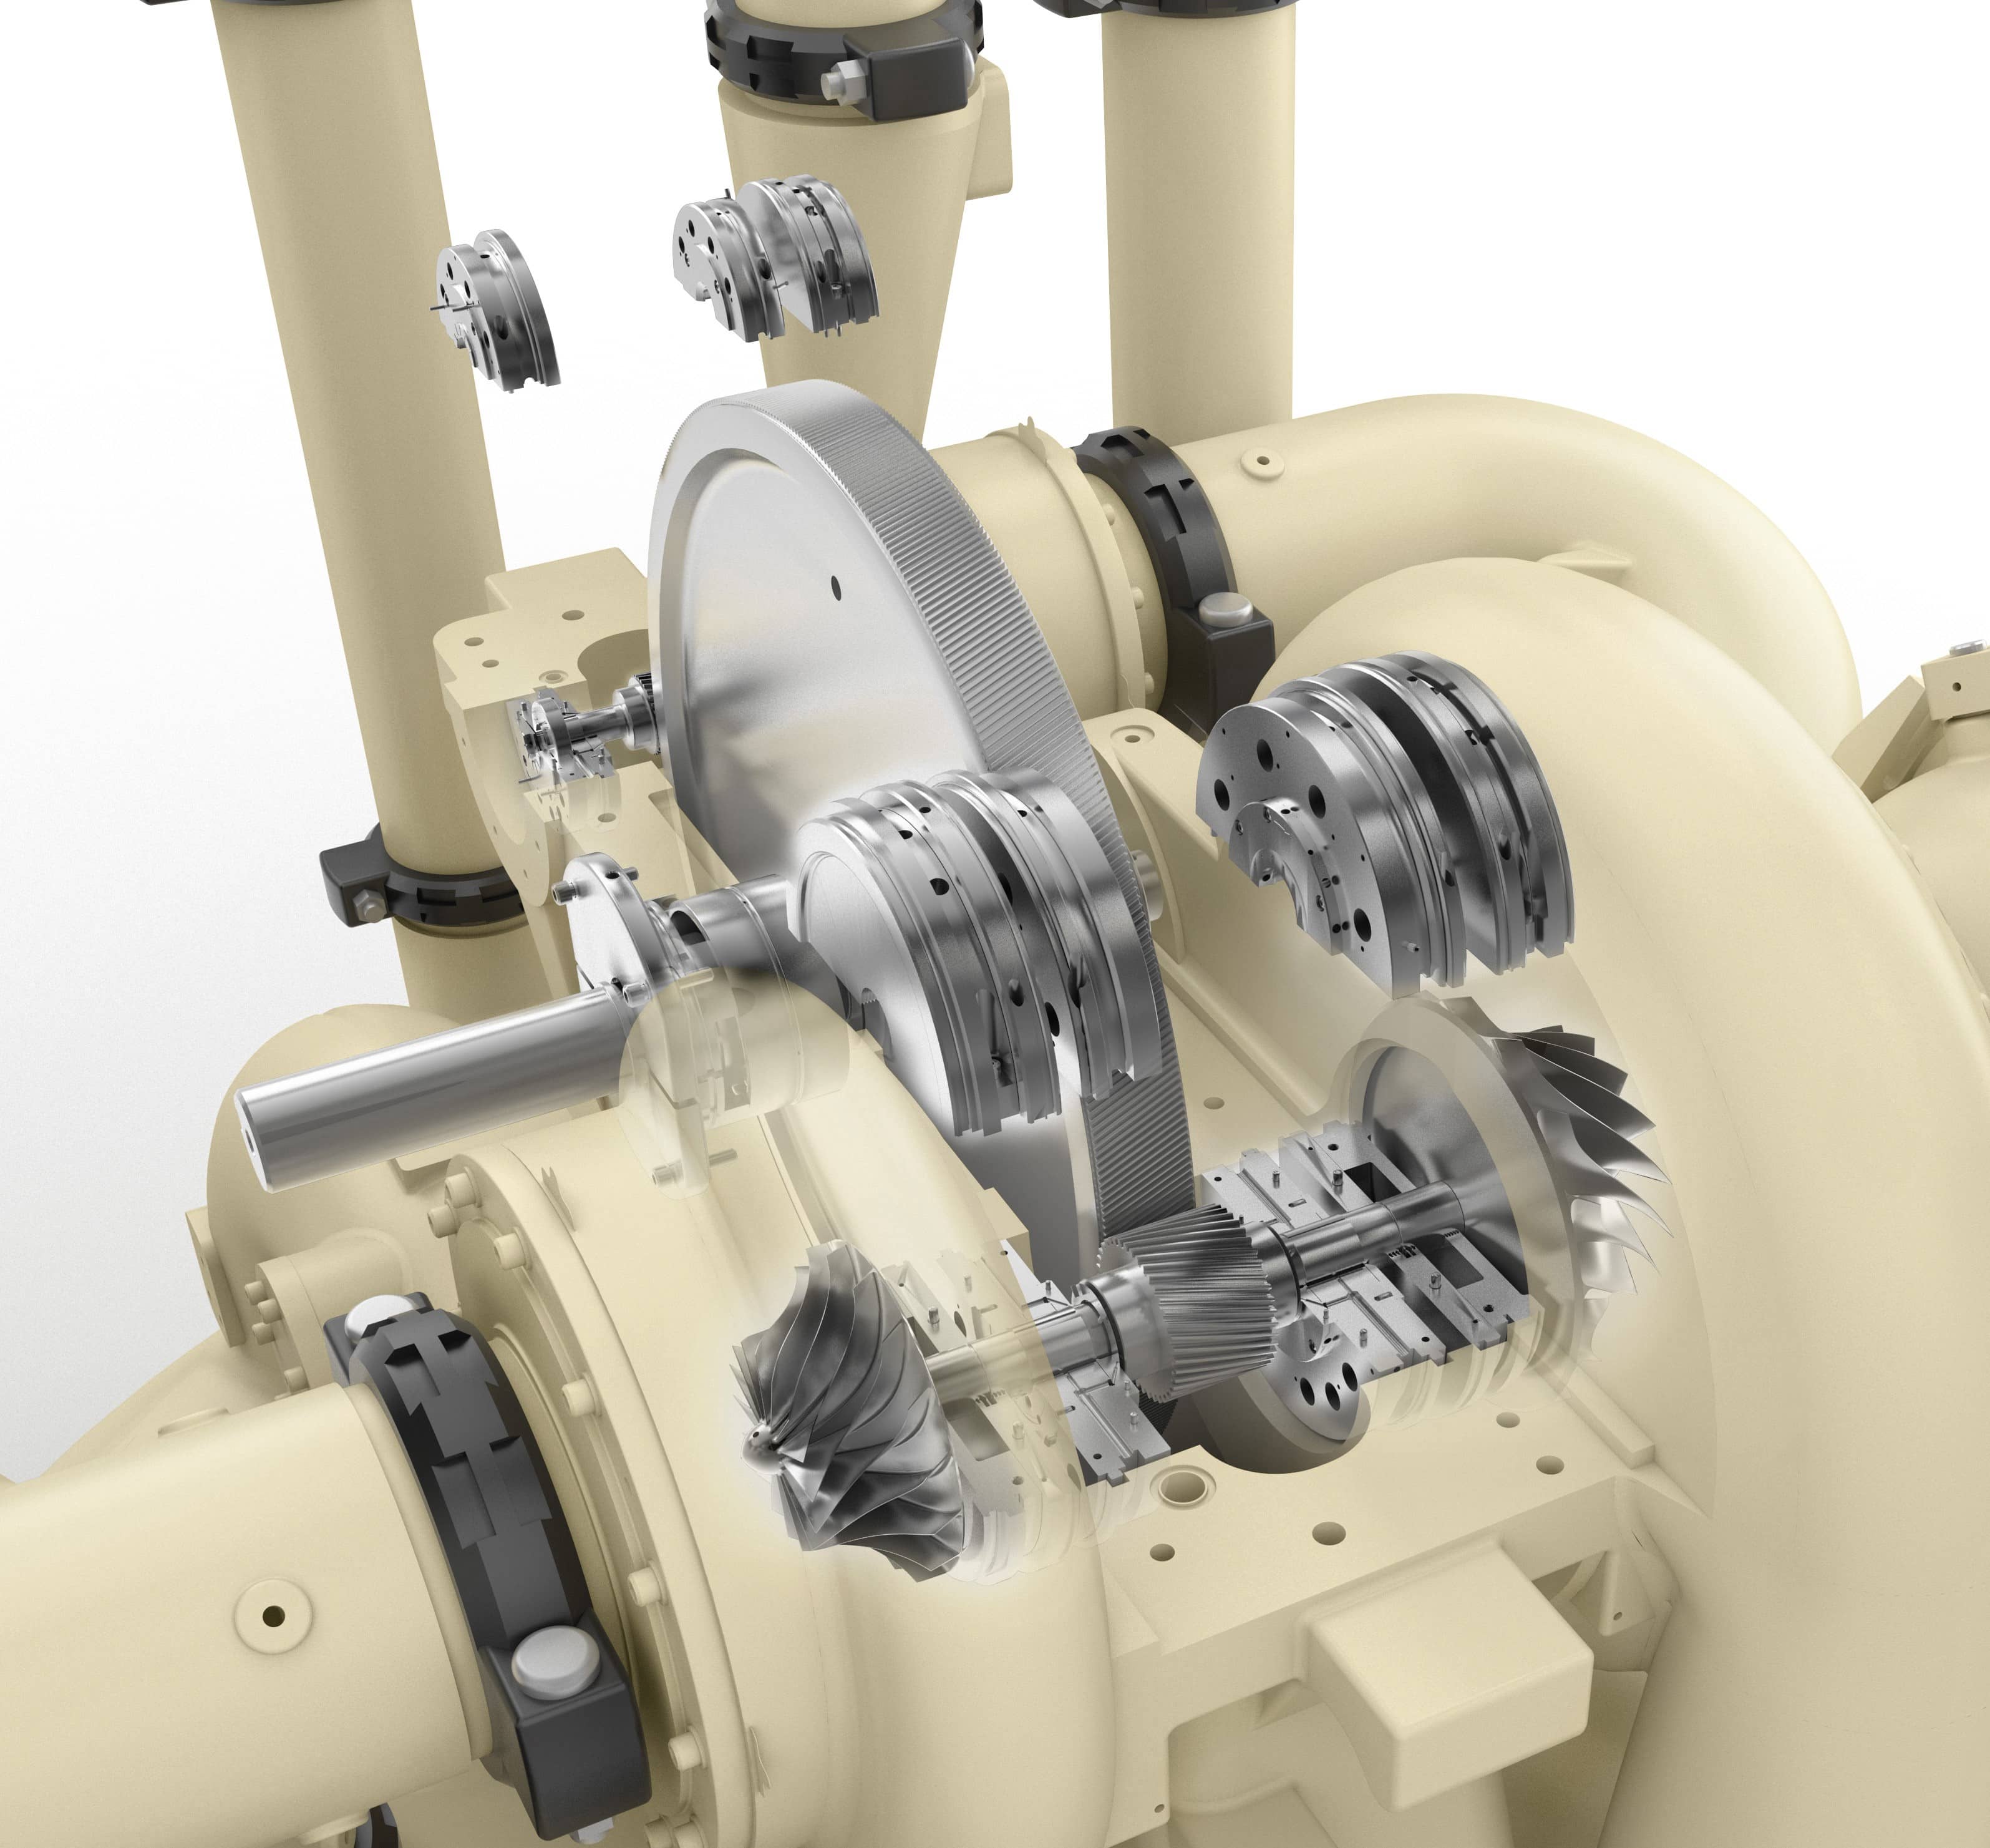 7 msg turbo air nx 5000 600 1050kw centrifugal compressor gears detail